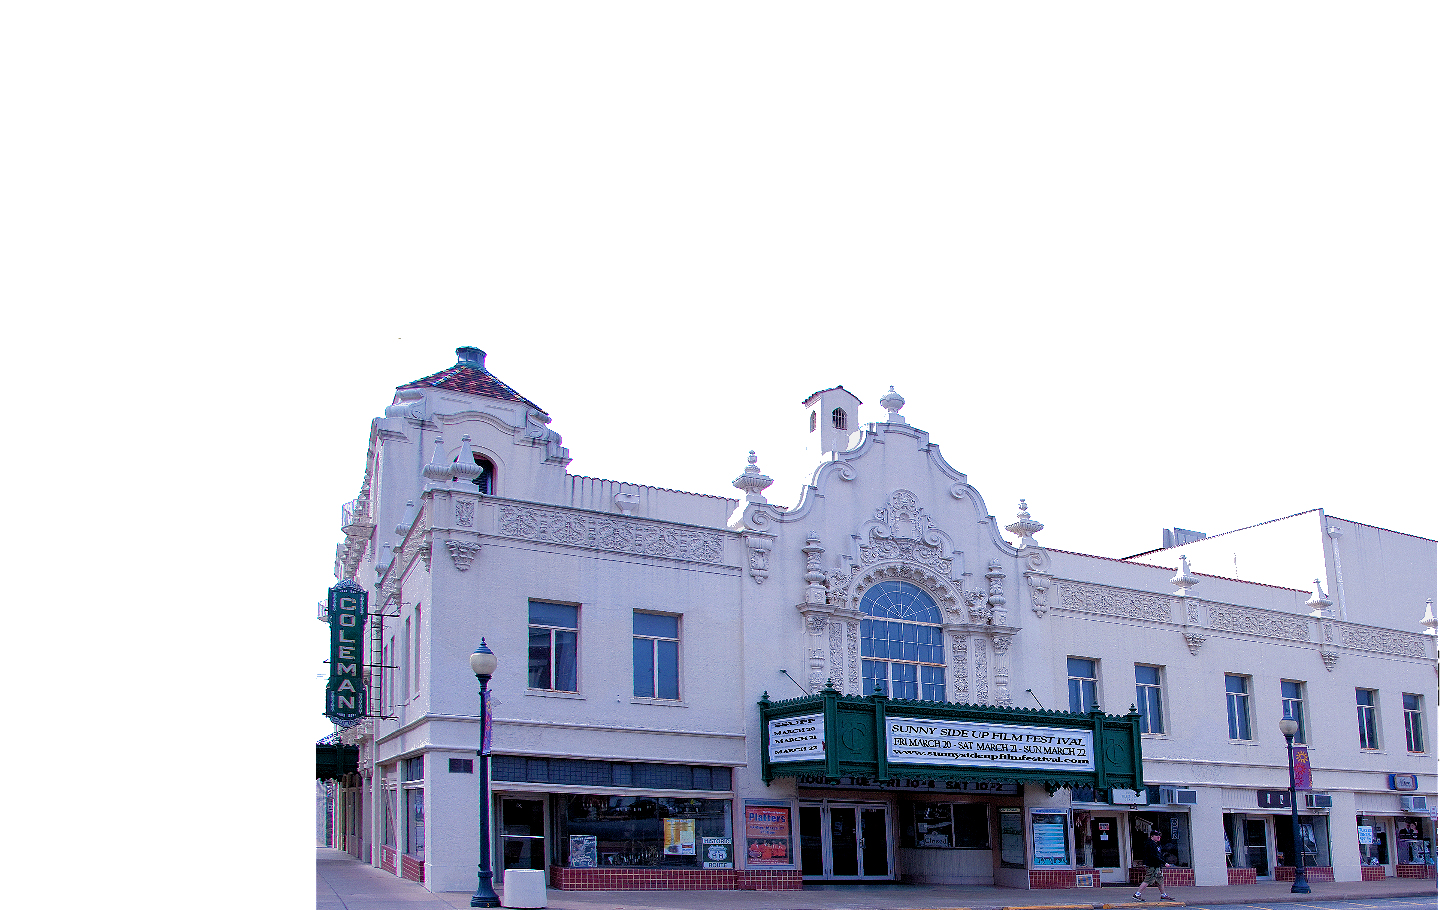 The Coleman Theatre